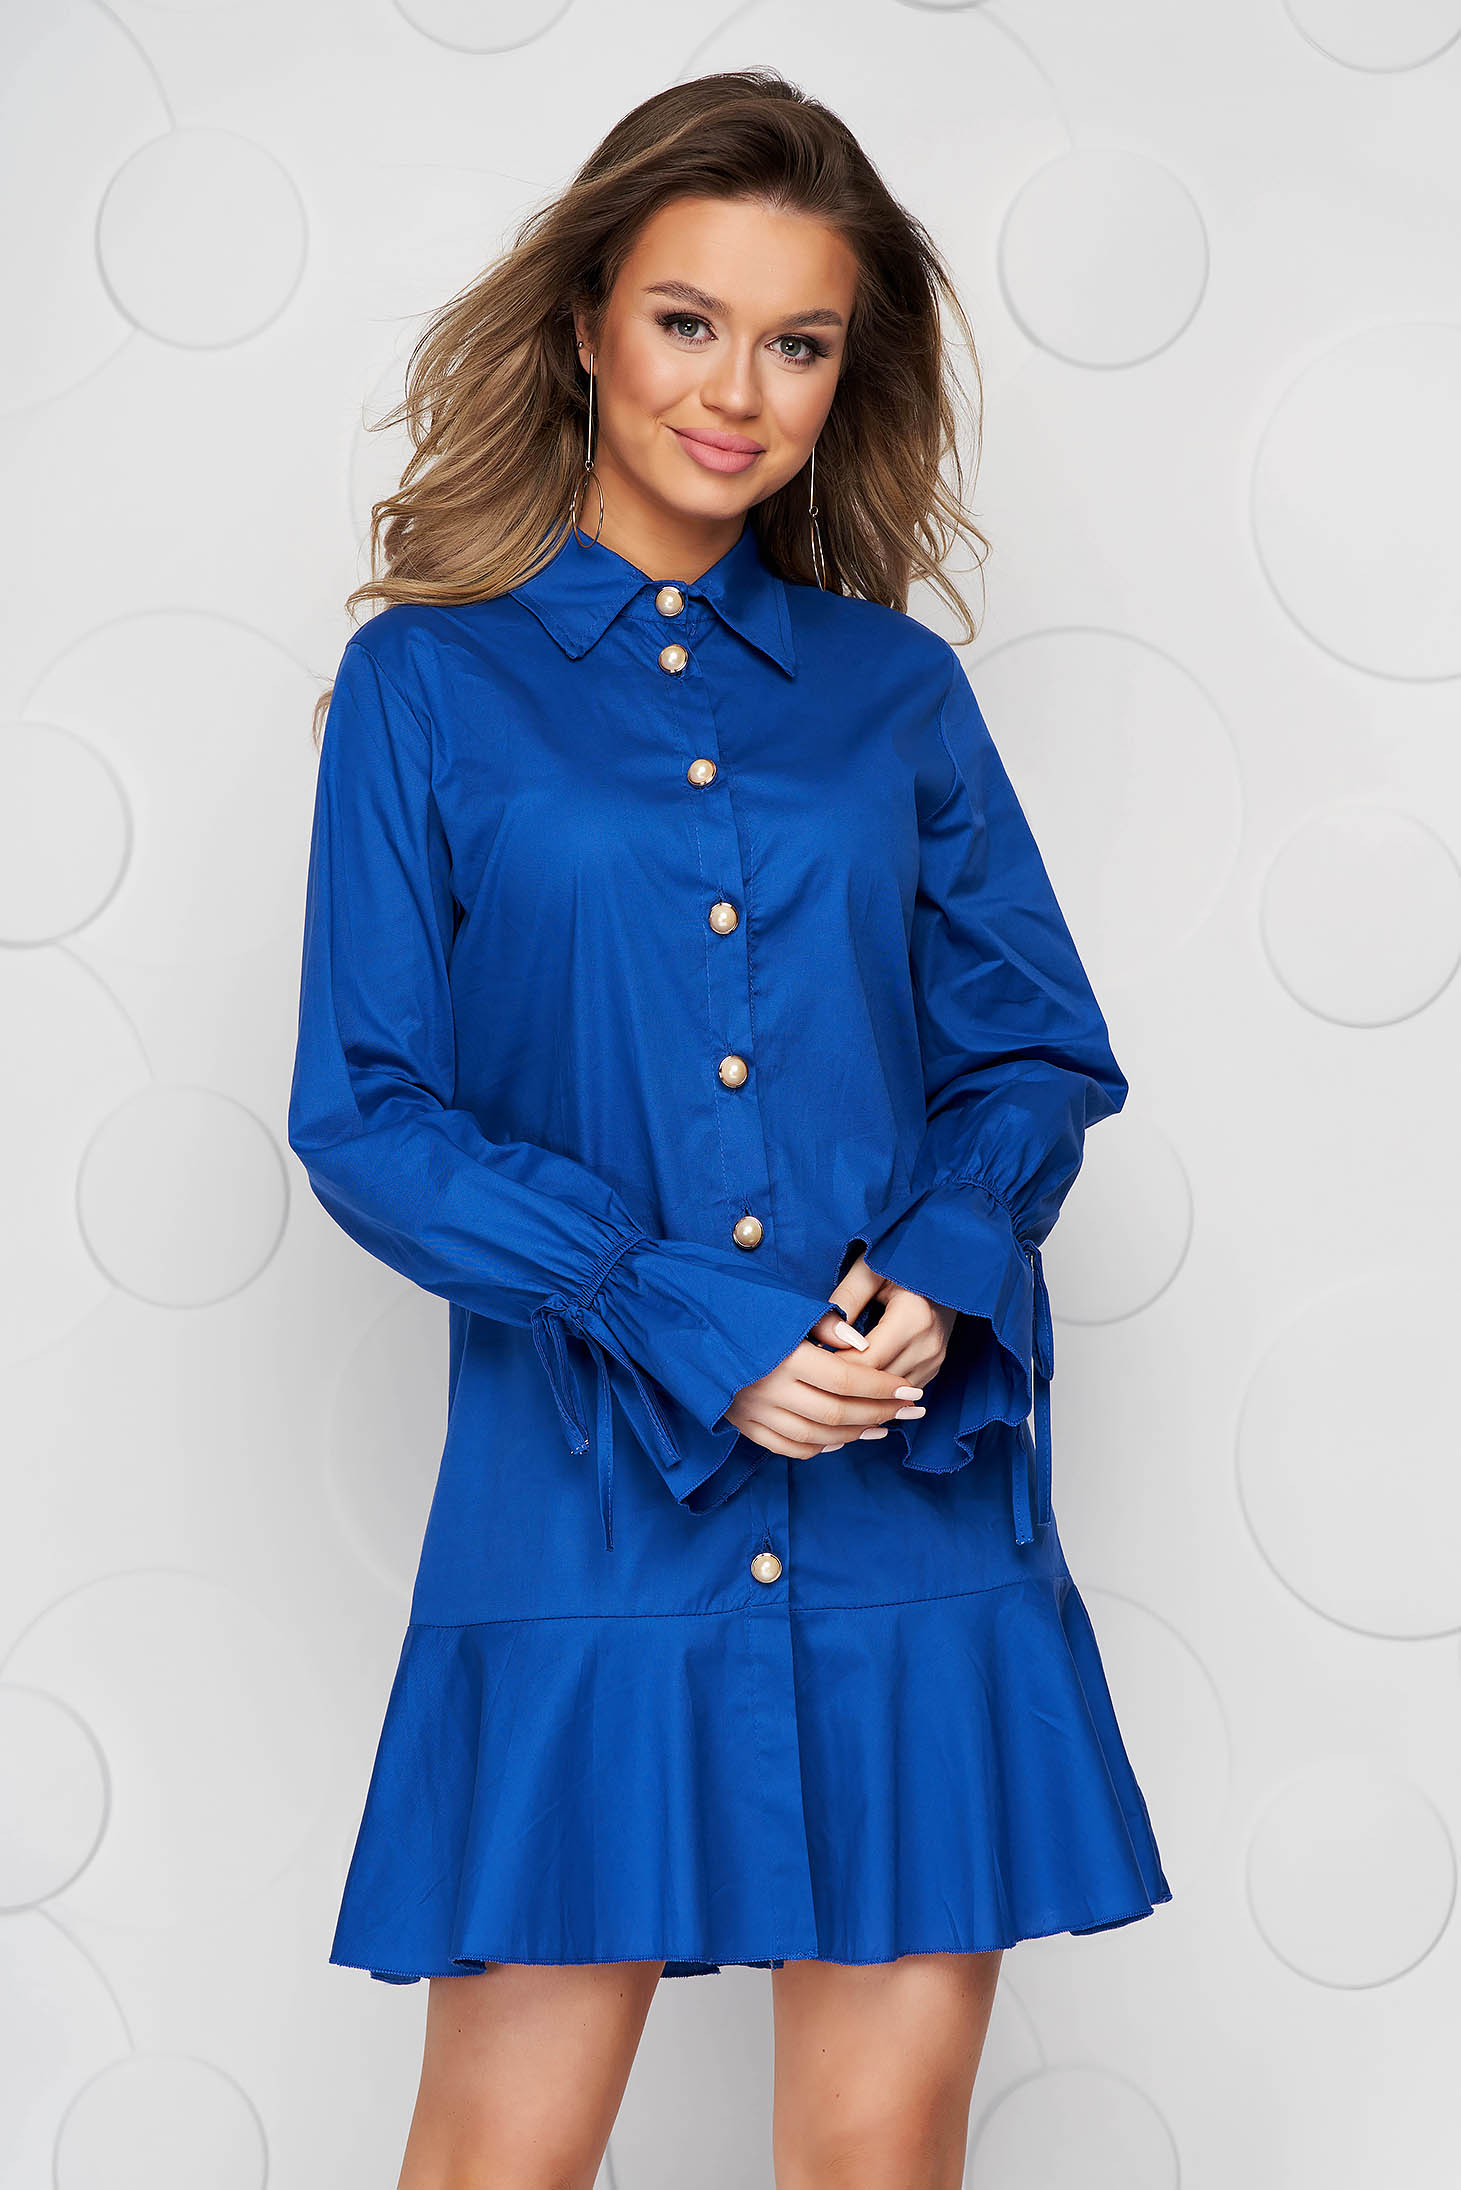 Rochie SunShine tip camasa albastra din material subtire accesorizata cu fundite cu croi larg midi 1 - StarShinerS.ro